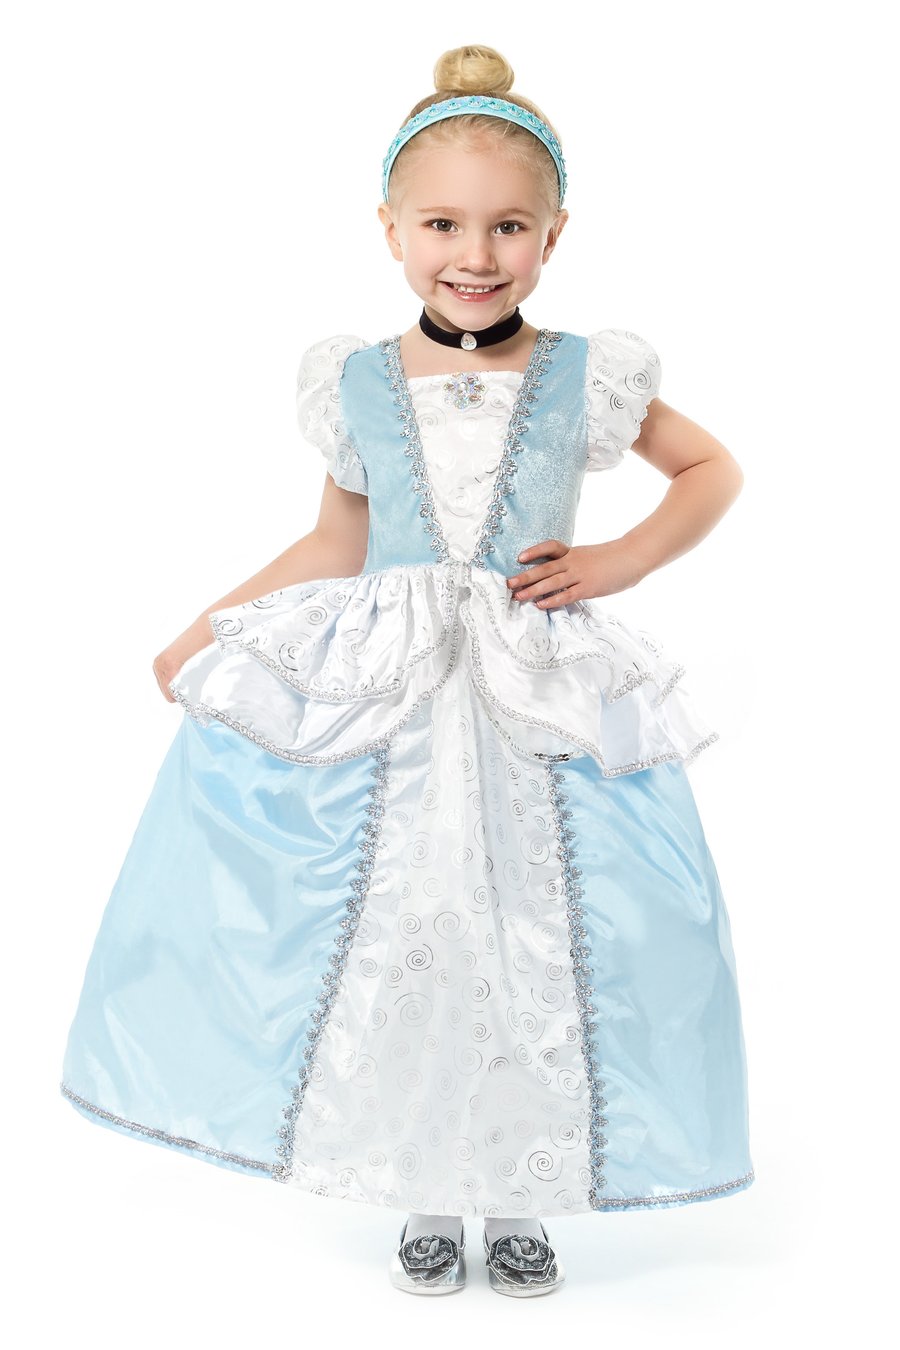 Cinderella Dress Up Costume